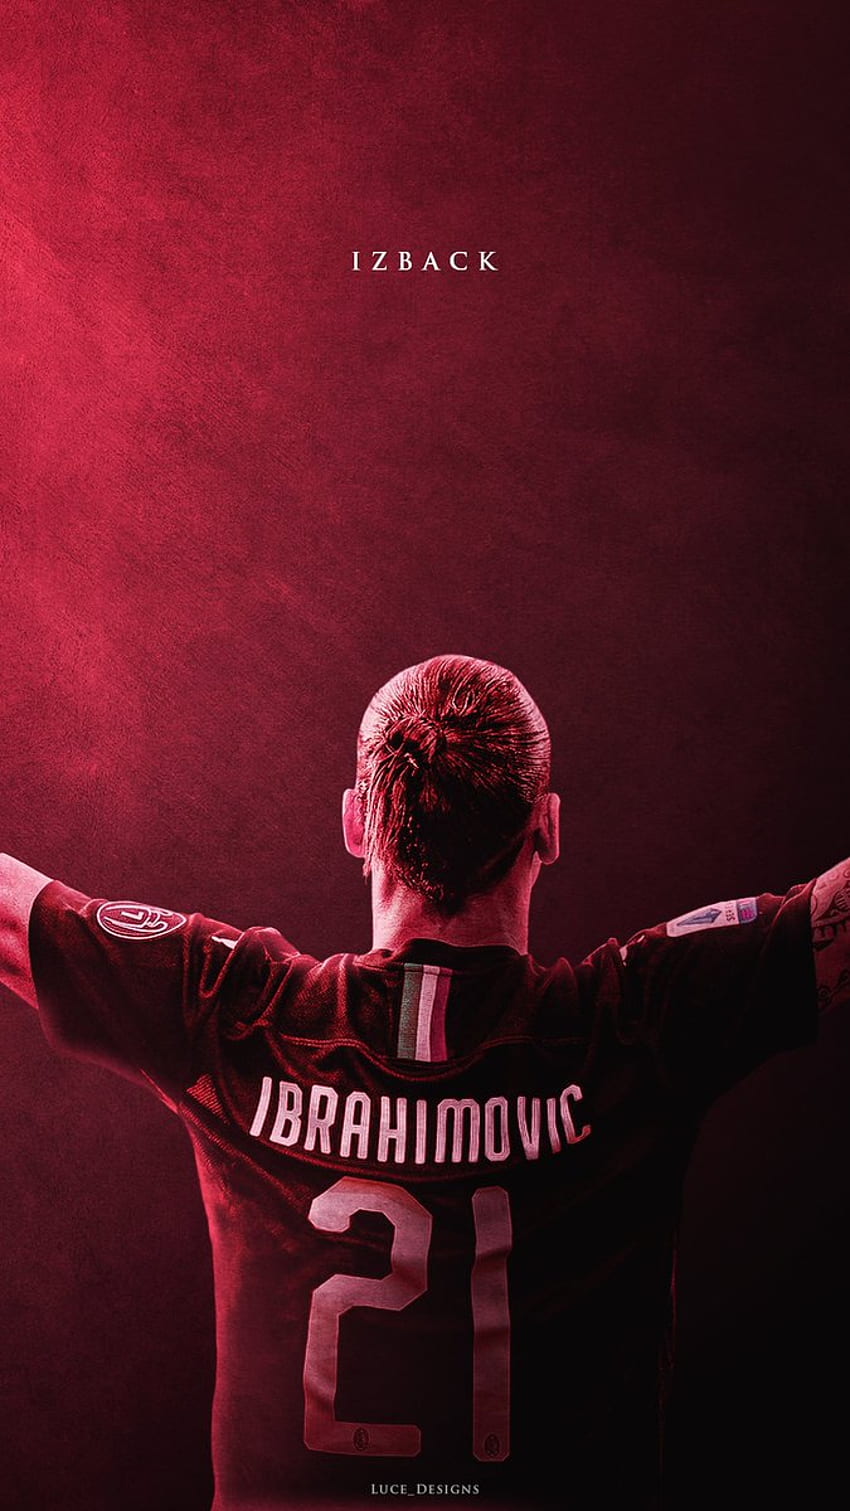 Ryan Giggs Compares Zlatan Ibrahimovic To Manchester United Cult Hero